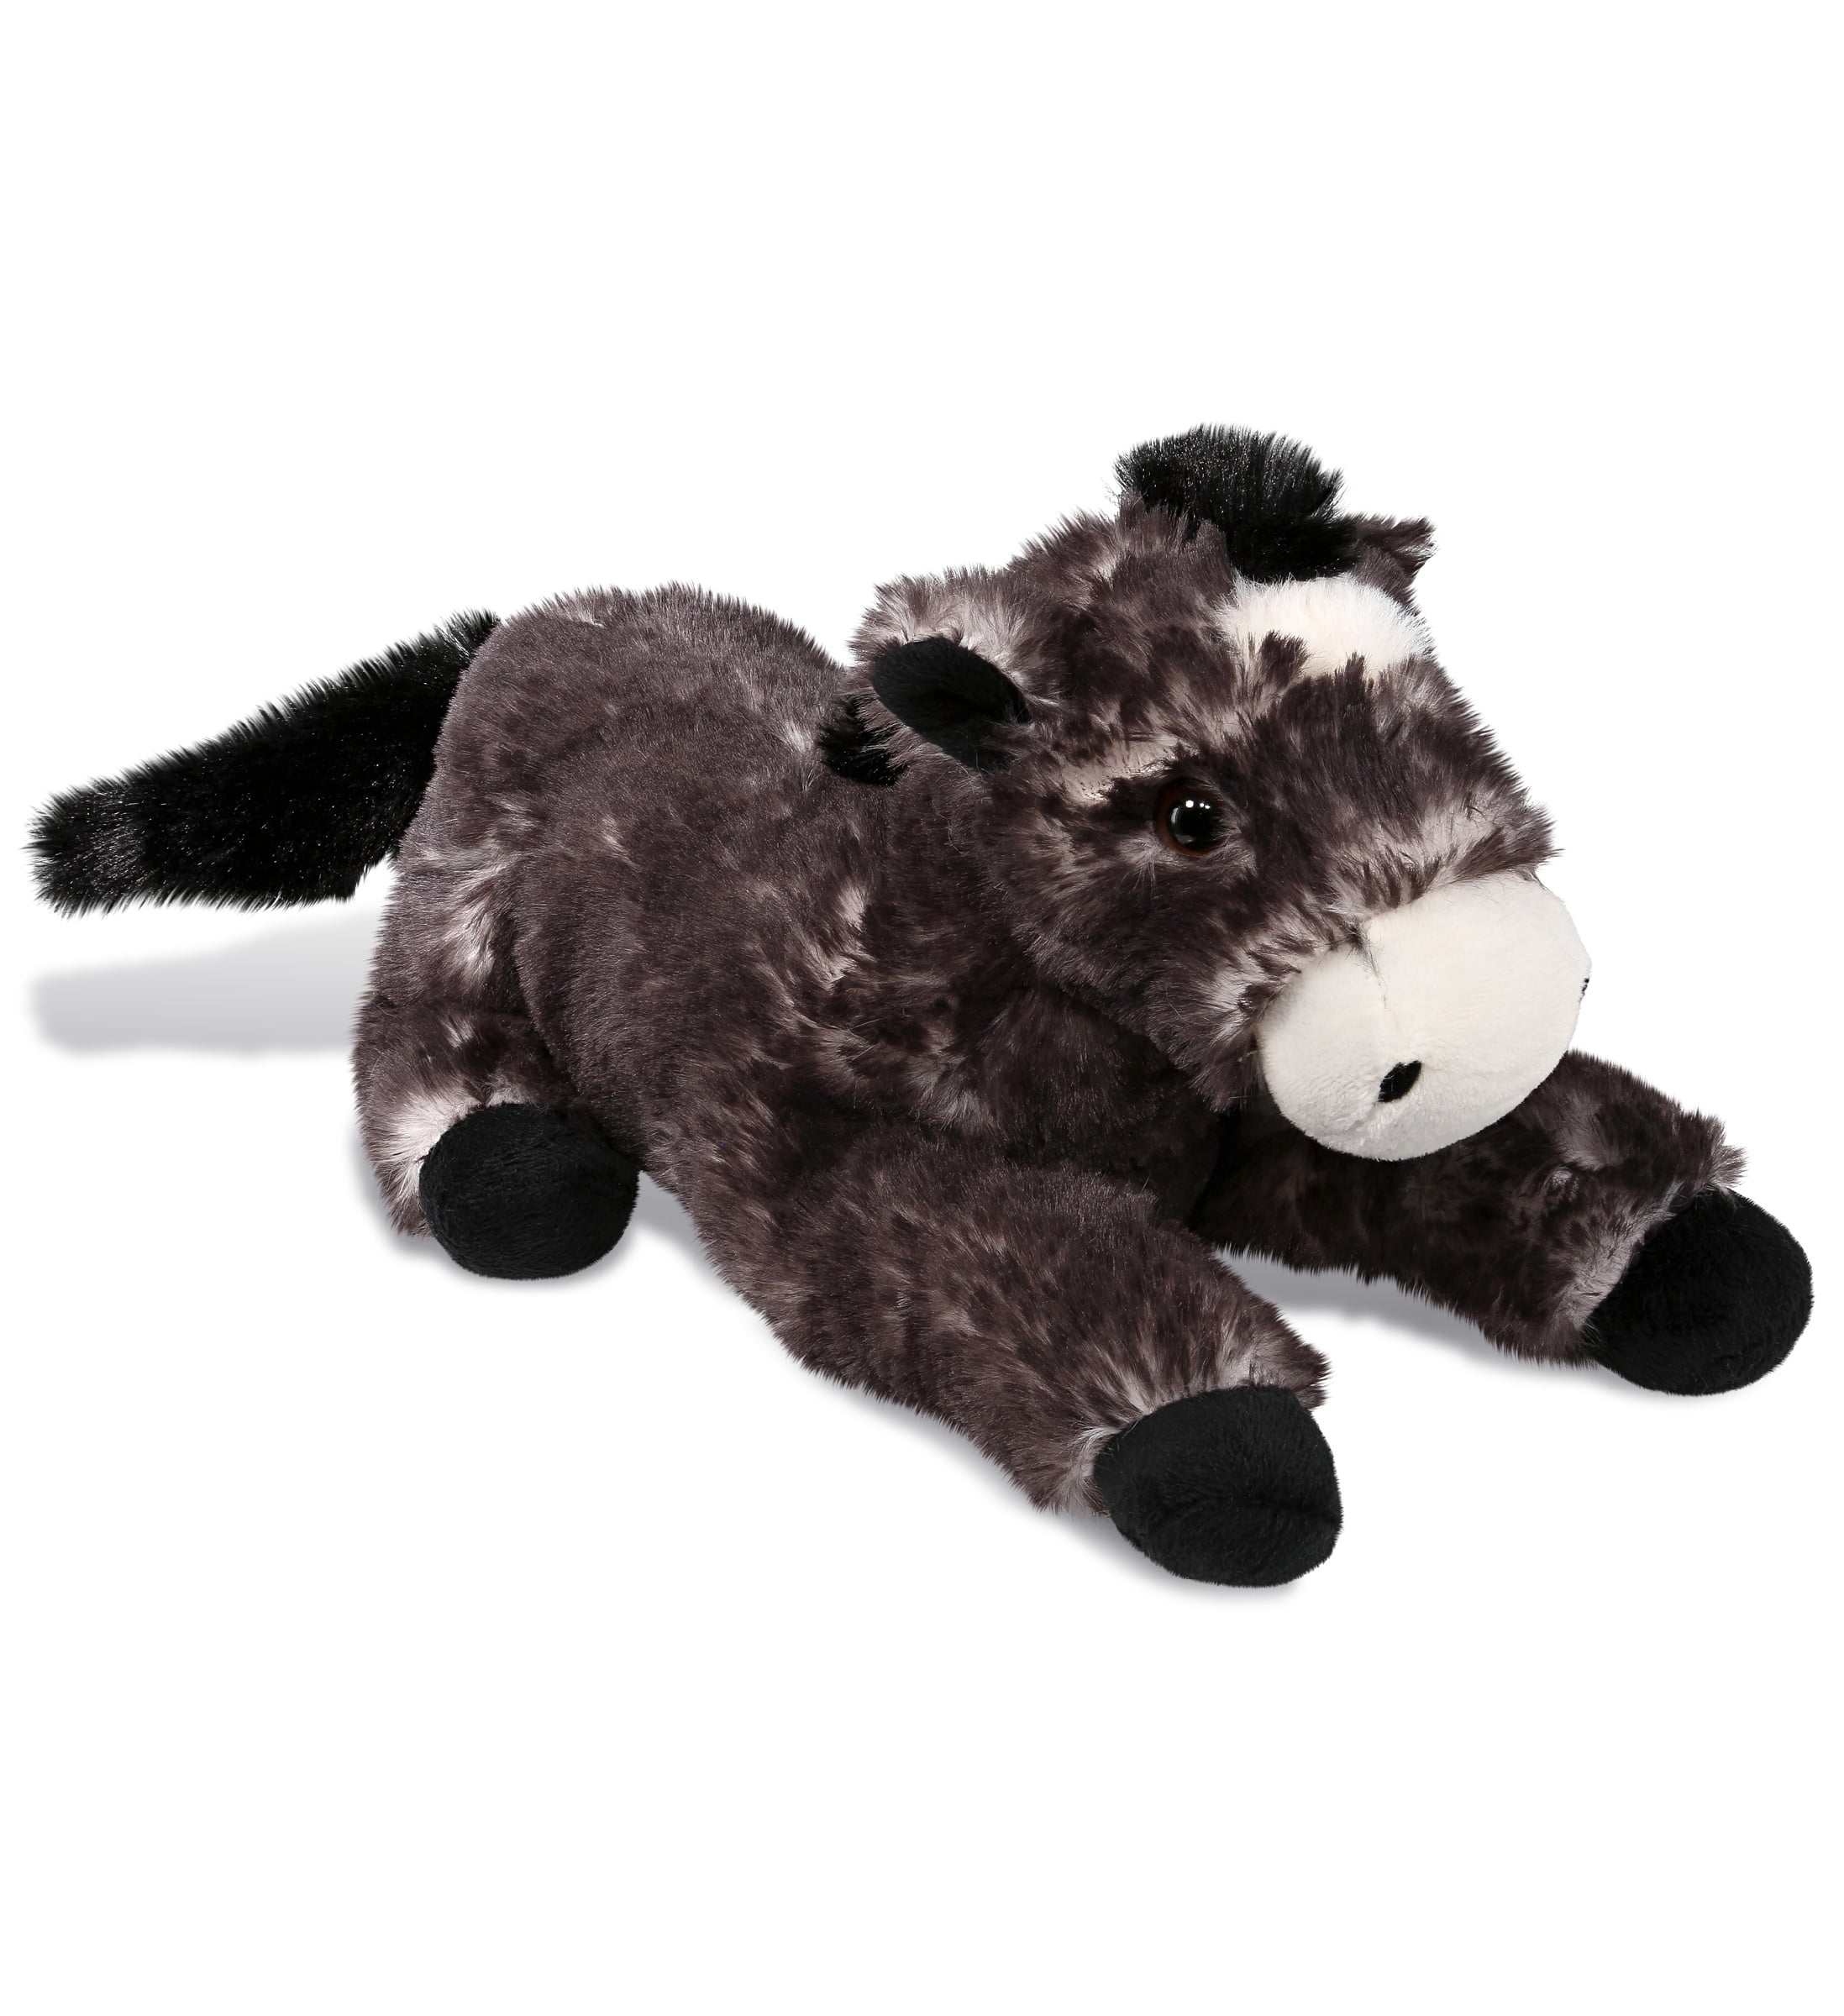 12 SMALL 3.25 Axolotl Slow Rise Squishy Toys - Memory Foam Party Favors,  Fidgets, Prizes, OT (RANDOM COLORS)